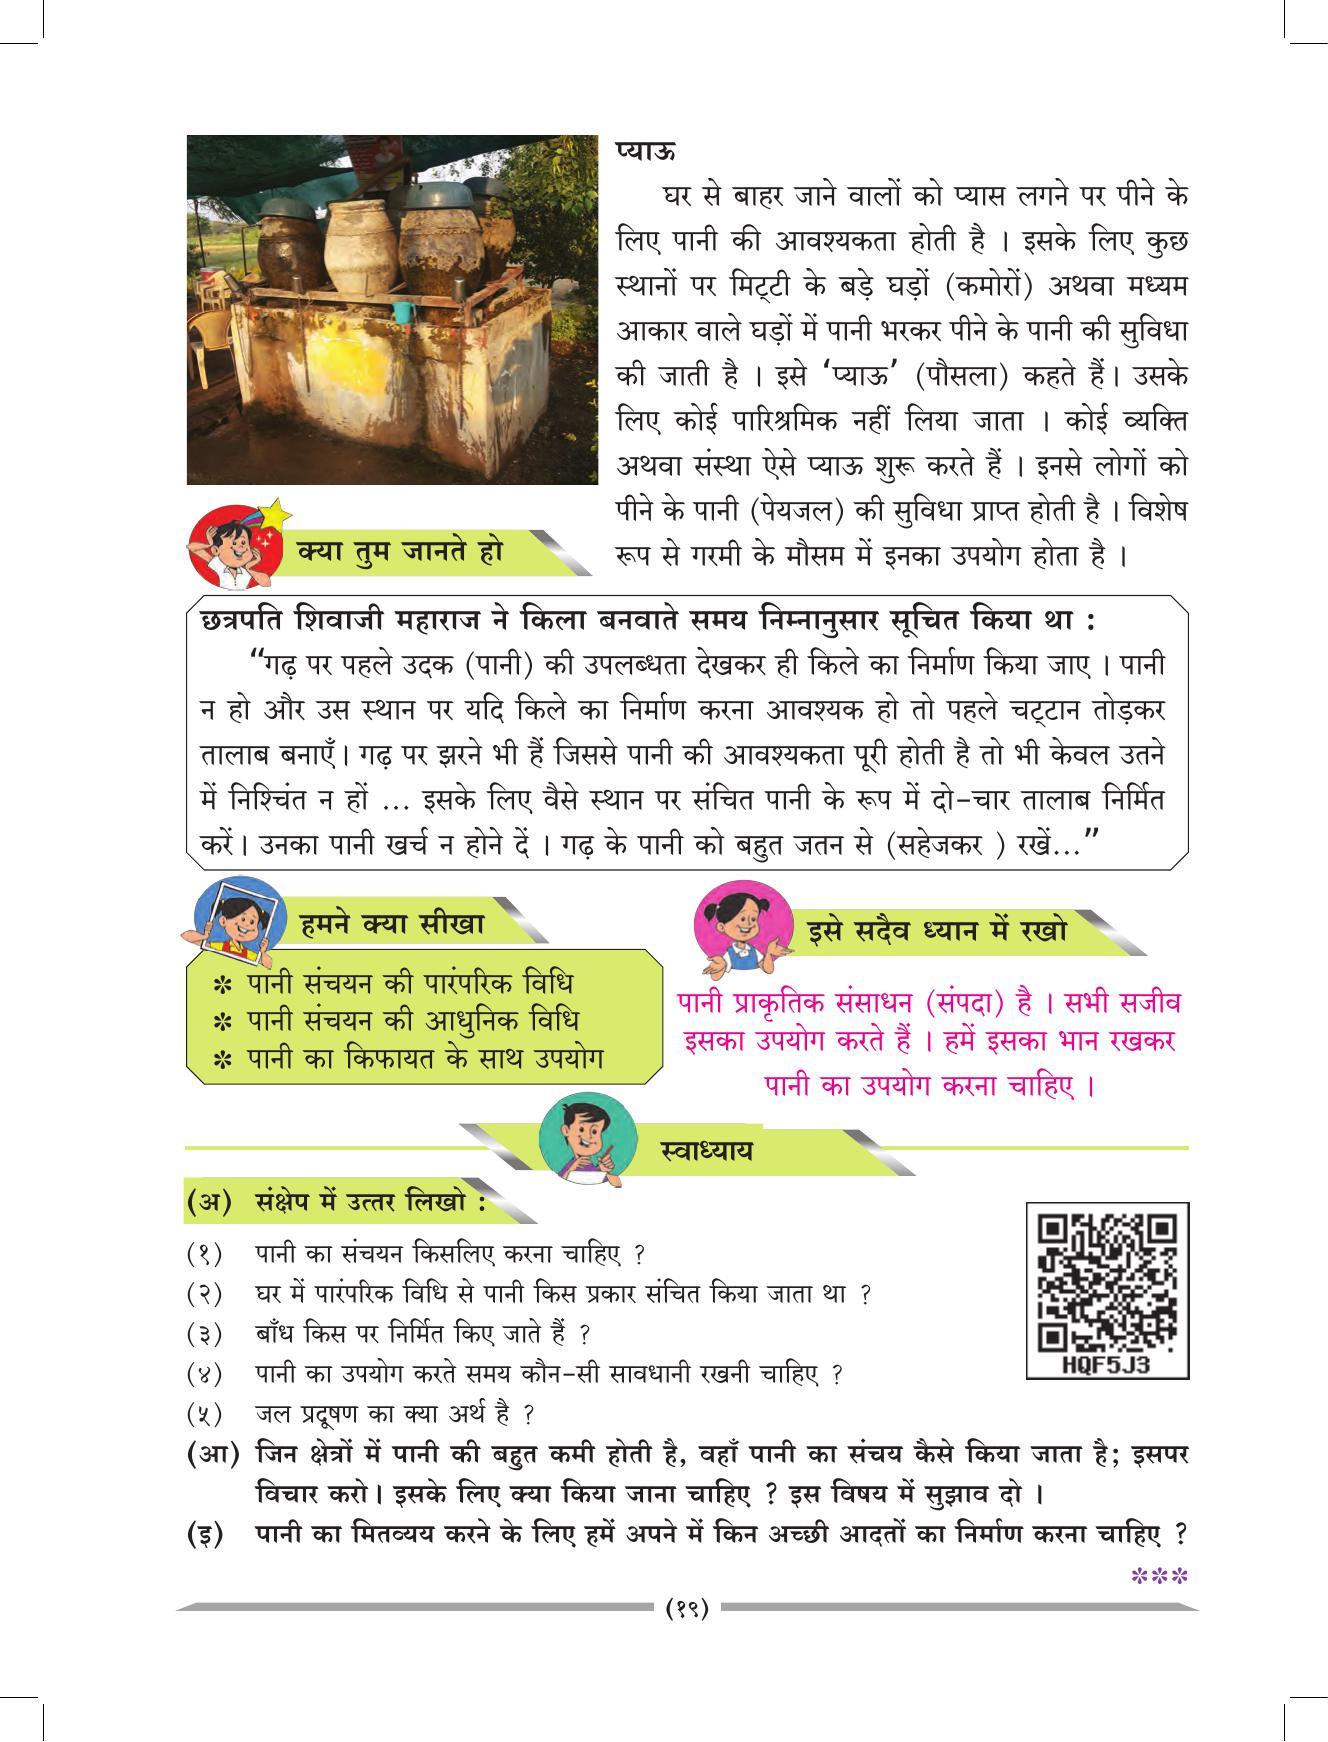 Maharashtra Board Class 4 EVS 1 (Hindi Medium) Textbook - Page 29